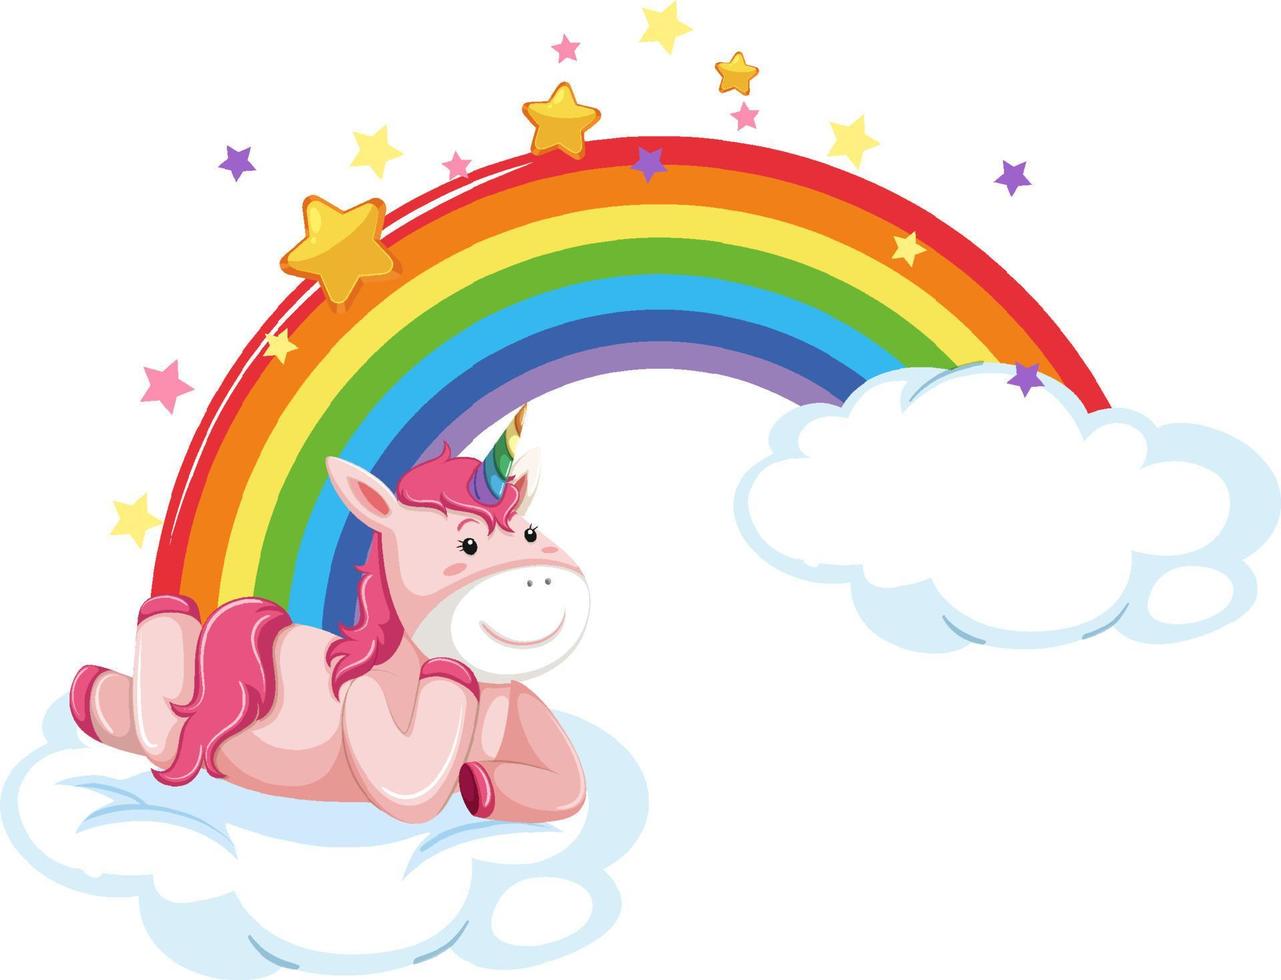 Cute unicorn lying on cloud with rainbow in cartoon style vector